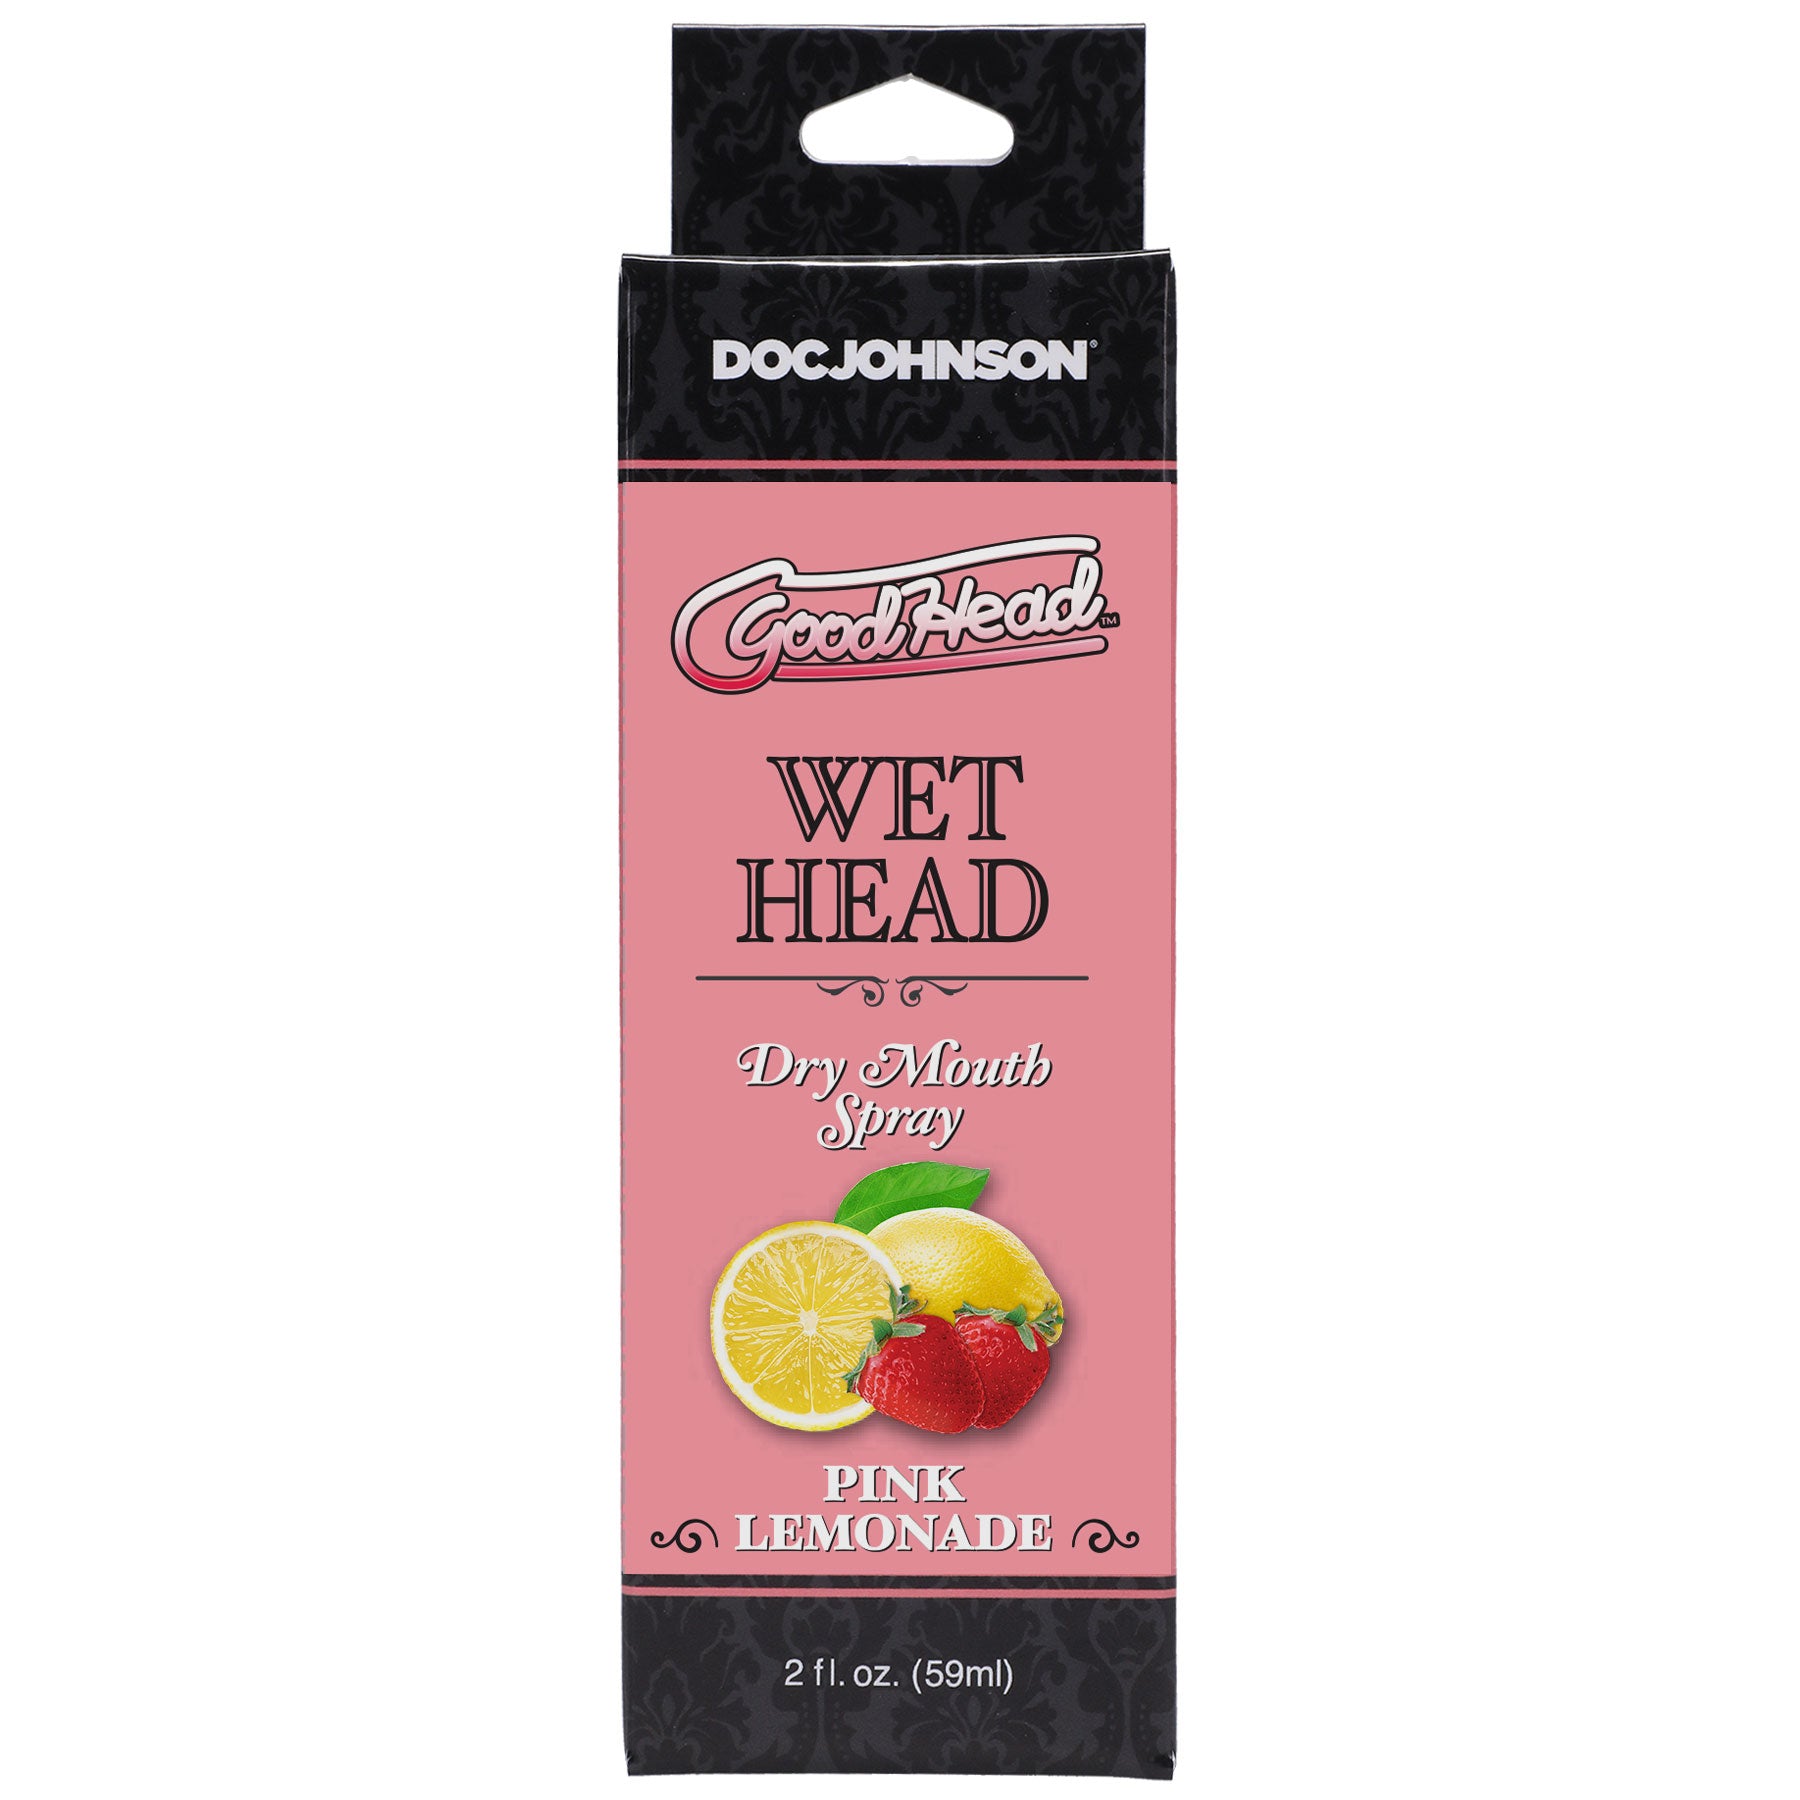 Goodhead - Wet Head - Dry Mouth Spray - Pink  Lemonade - 2 Fl. Oz. (59ml)